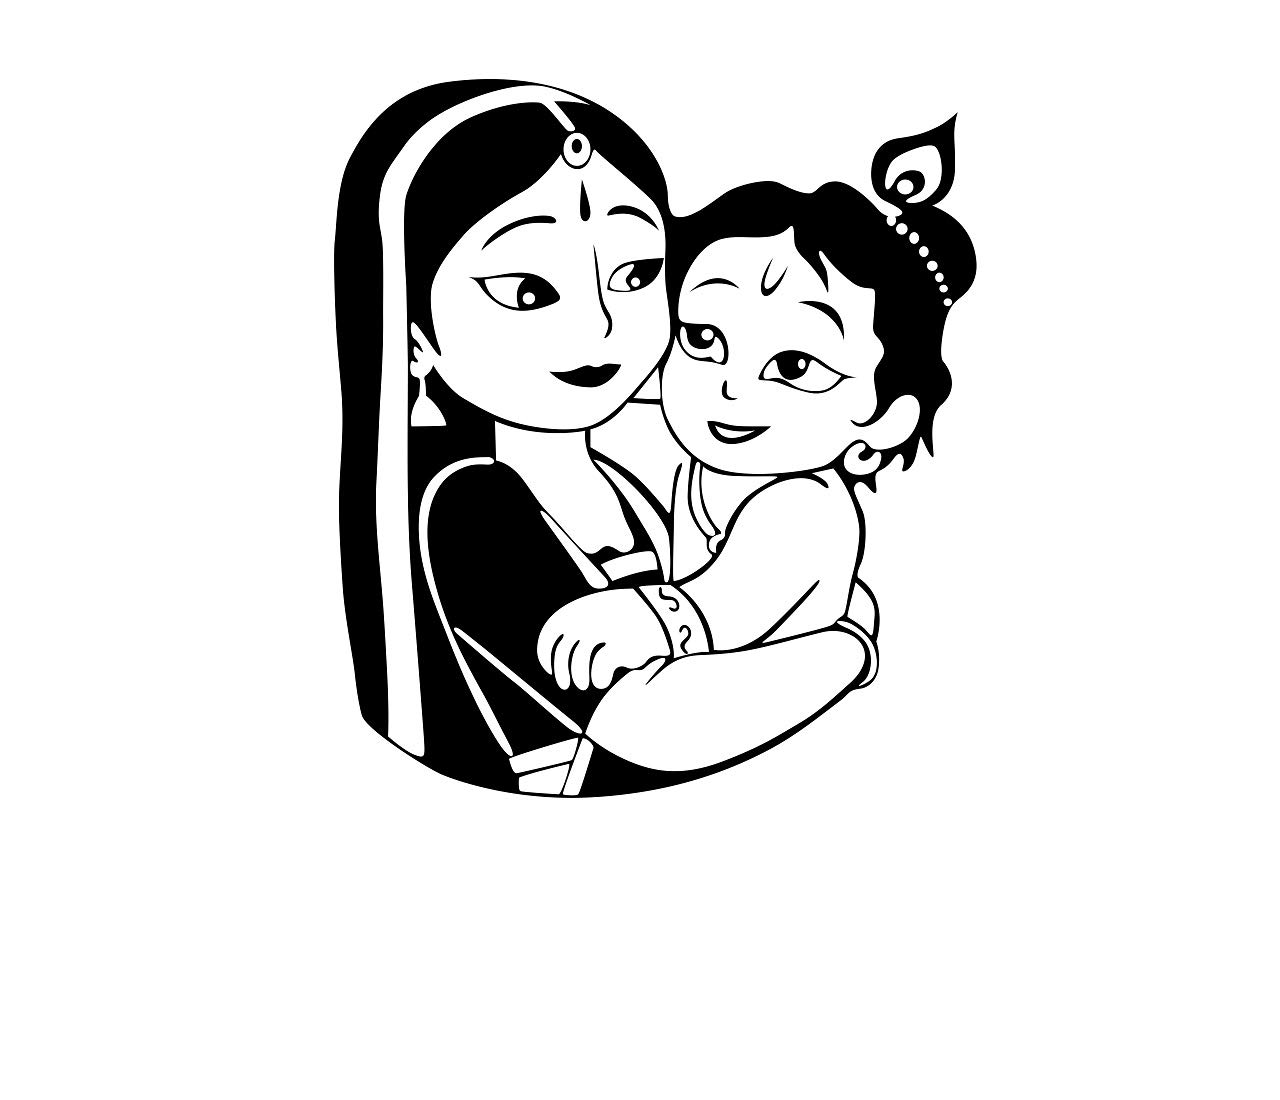 How to draw cute little krishna / Pencil shading sketch of krishna - YouTube-saigonsouth.com.vn